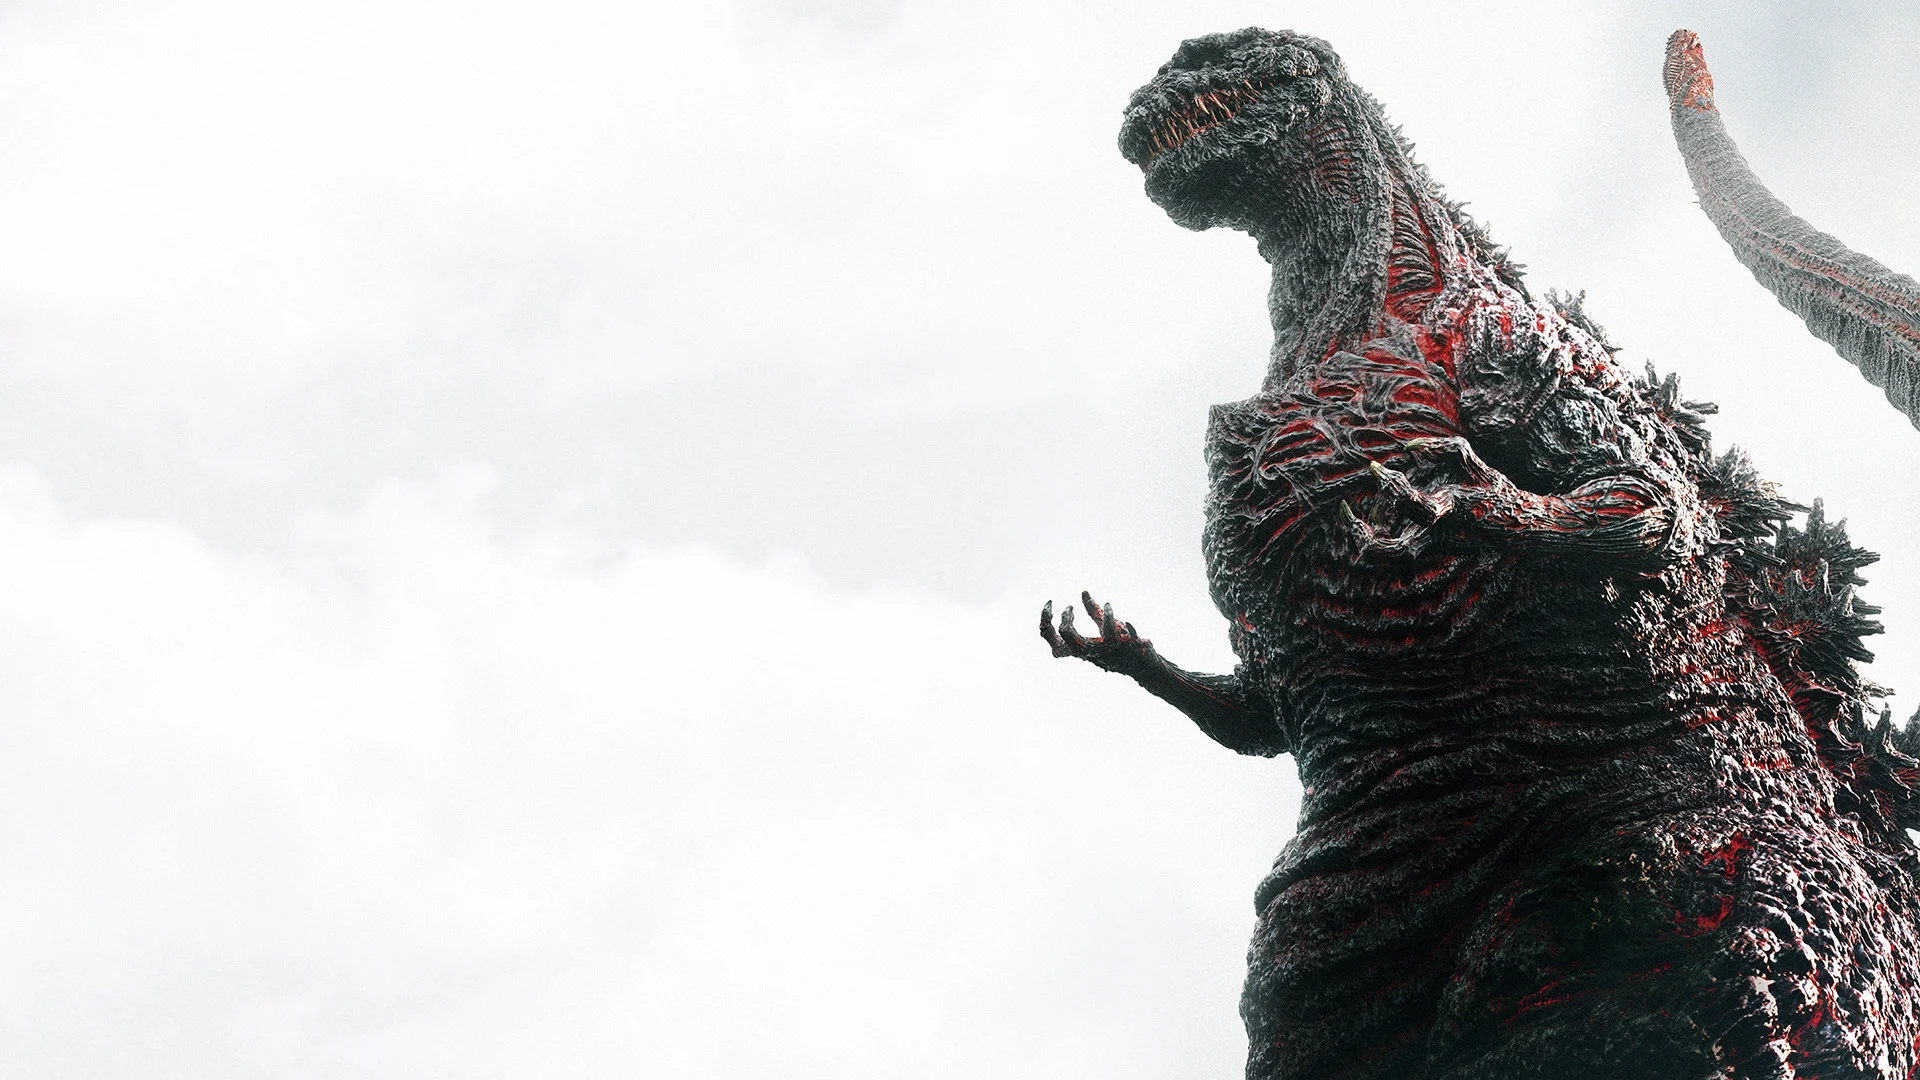 Shin Godzilla Becomes Japans Most Attended Godzilla Film in 50 Years